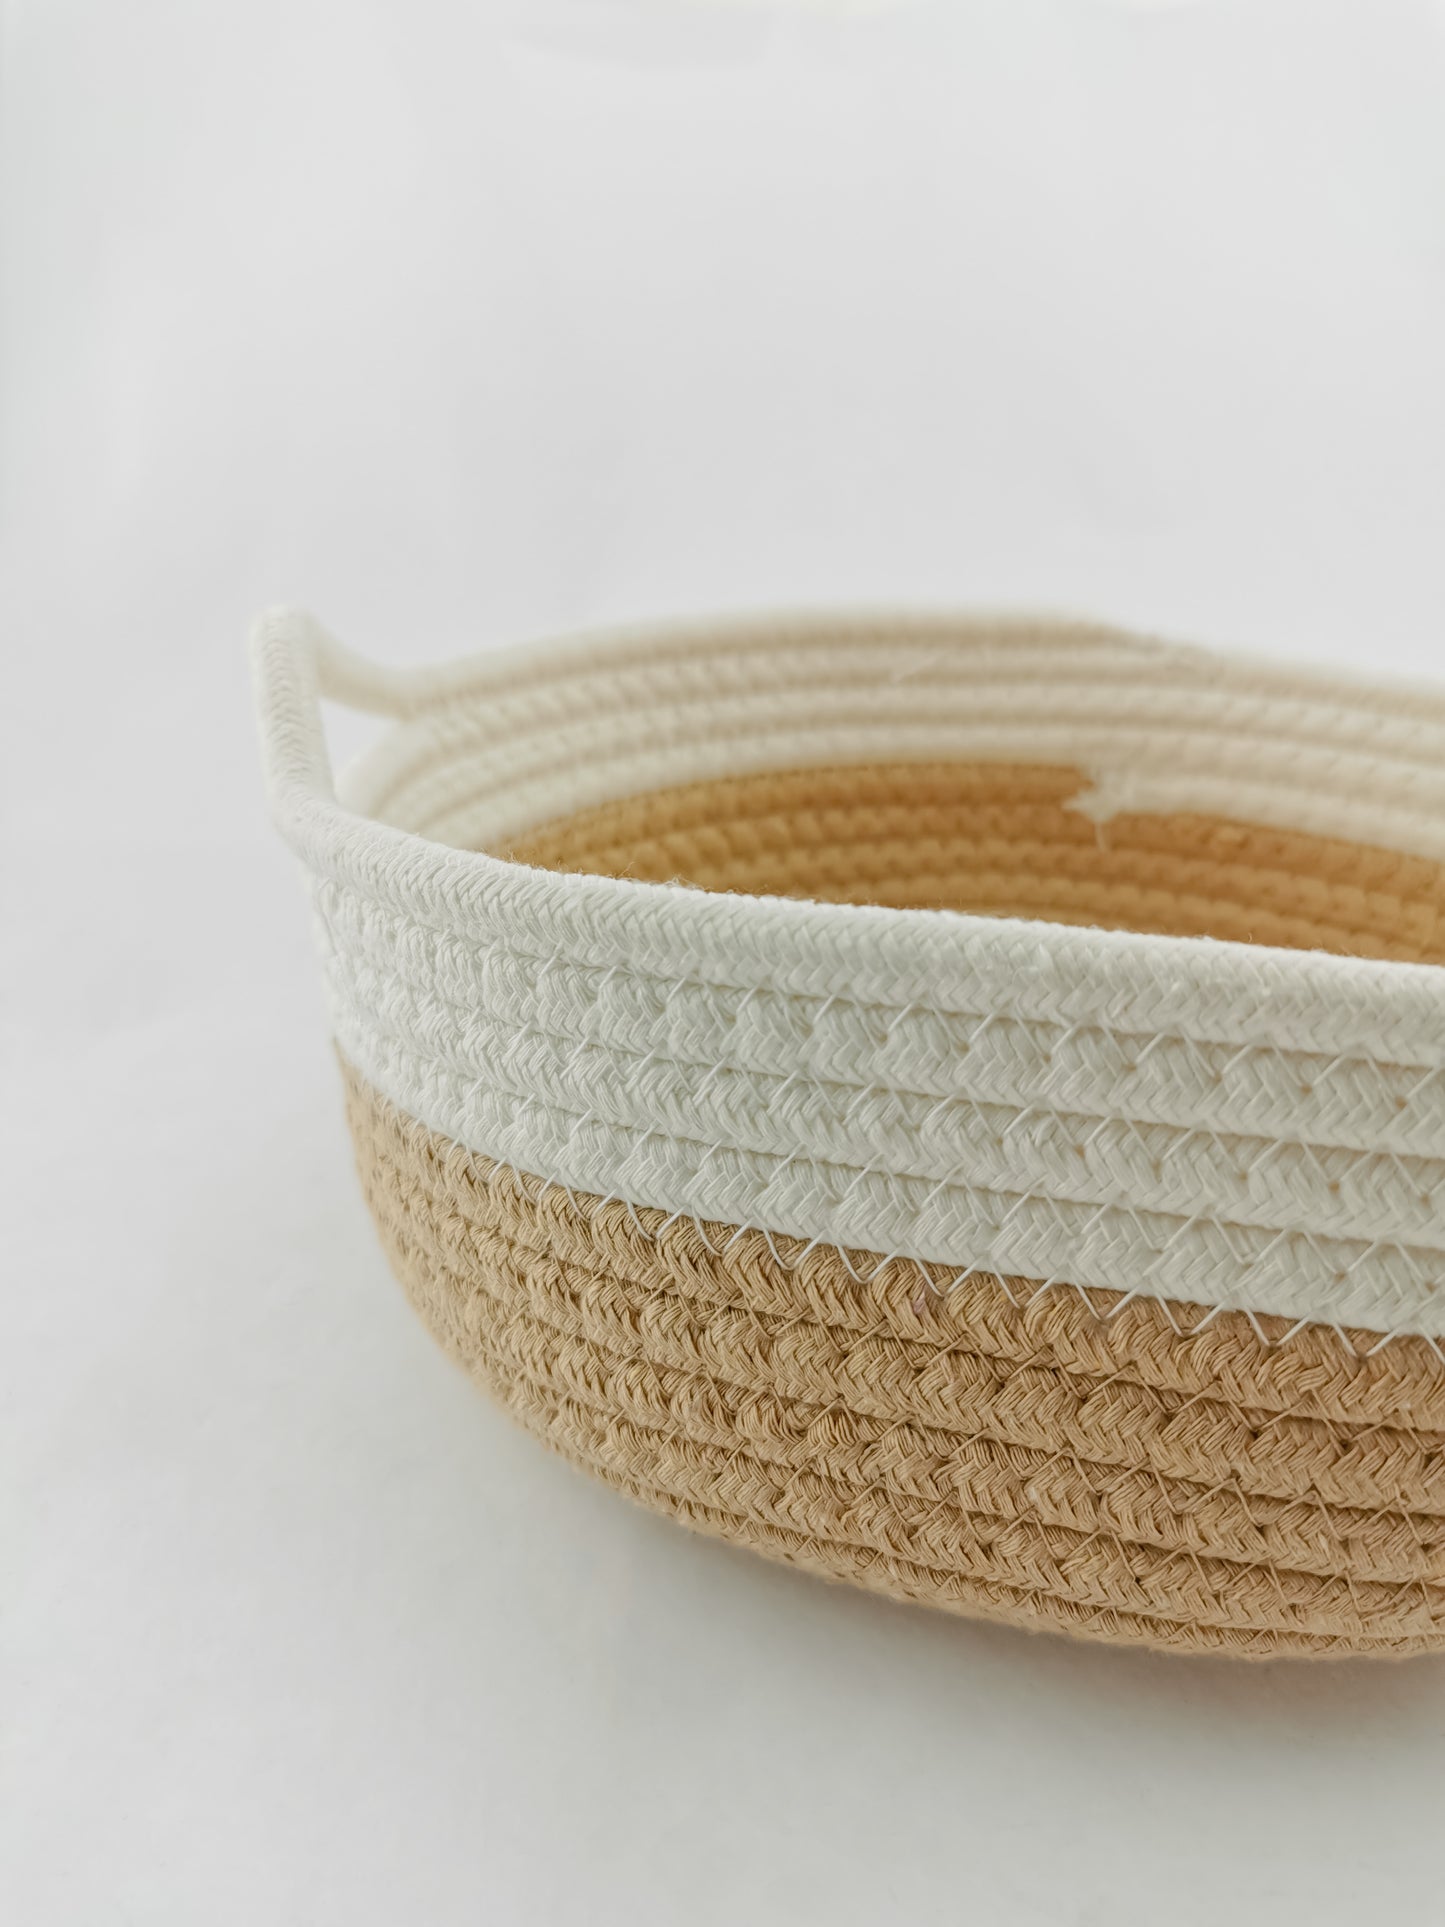 23cm Multi-Purpose Cotton Woven Knit Basket - Gifts by Art Tree